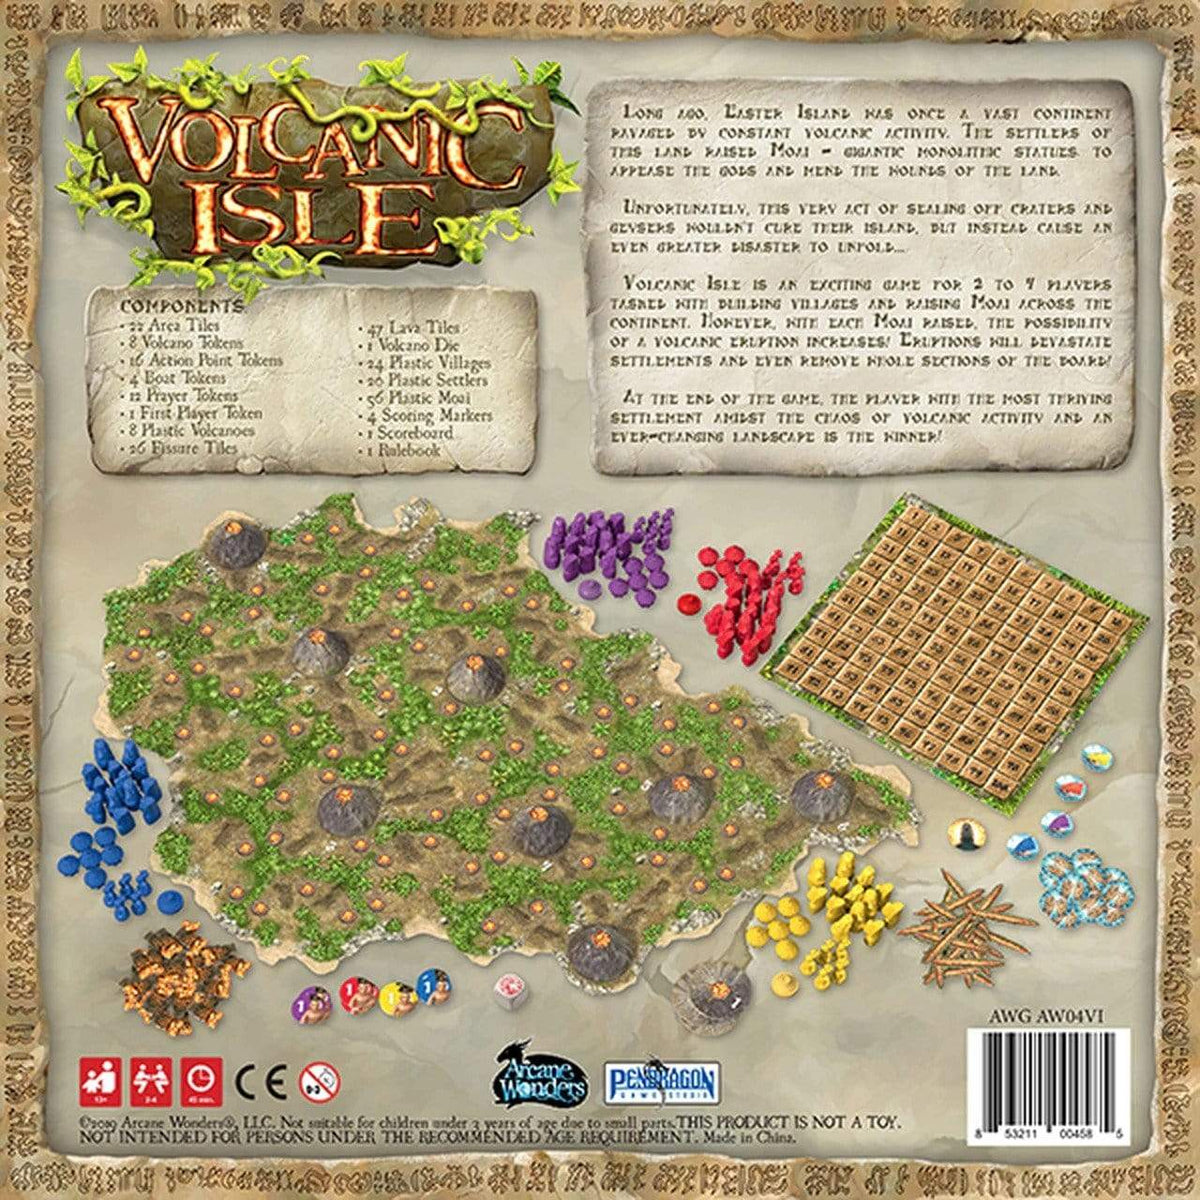 Volcanic Isle Alliance Games Board Games